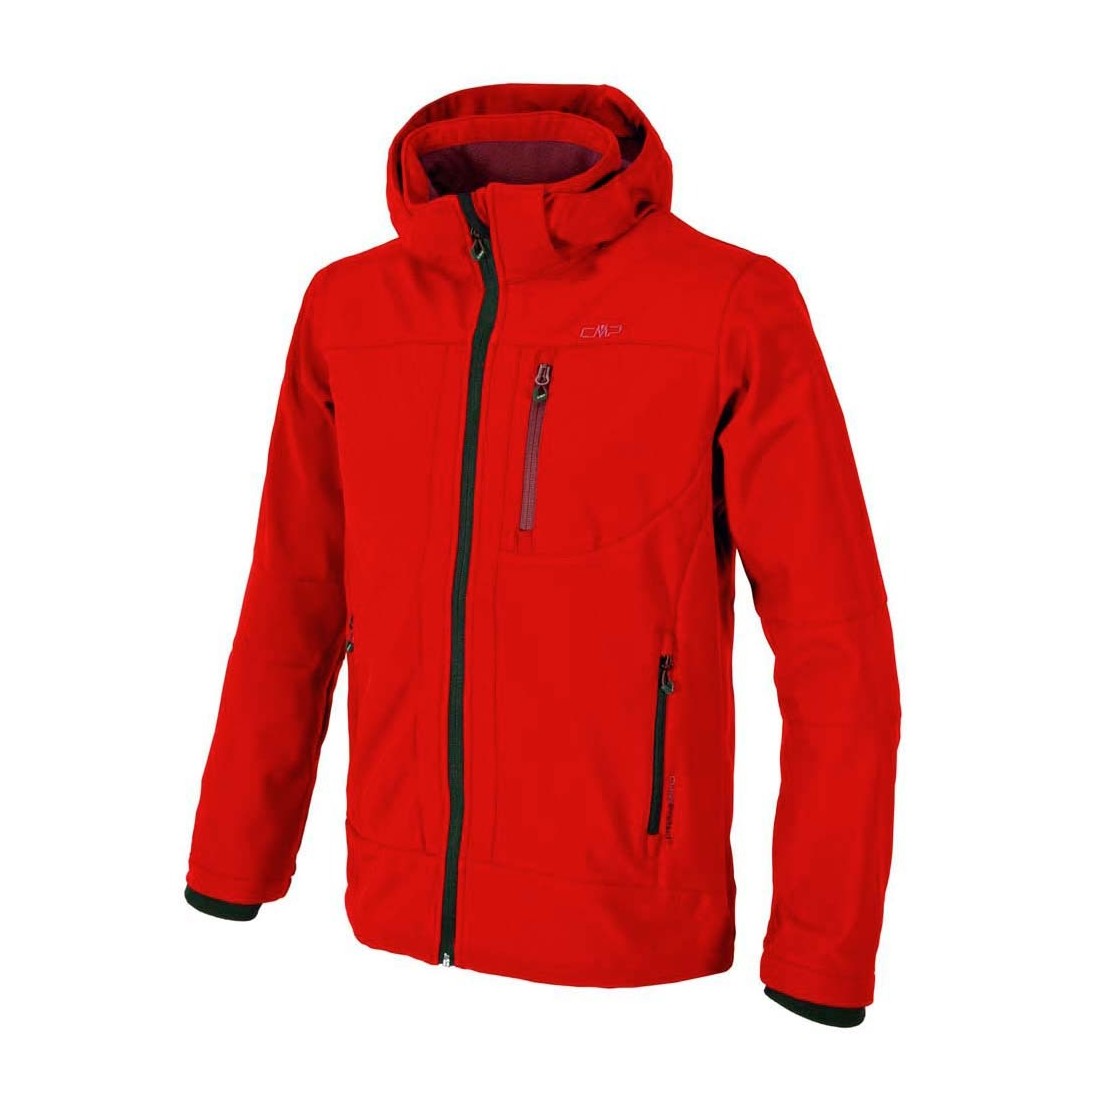 CMP Jacket Zip Hood Softshell - Chaqueta softshell Hombre, Comprar online